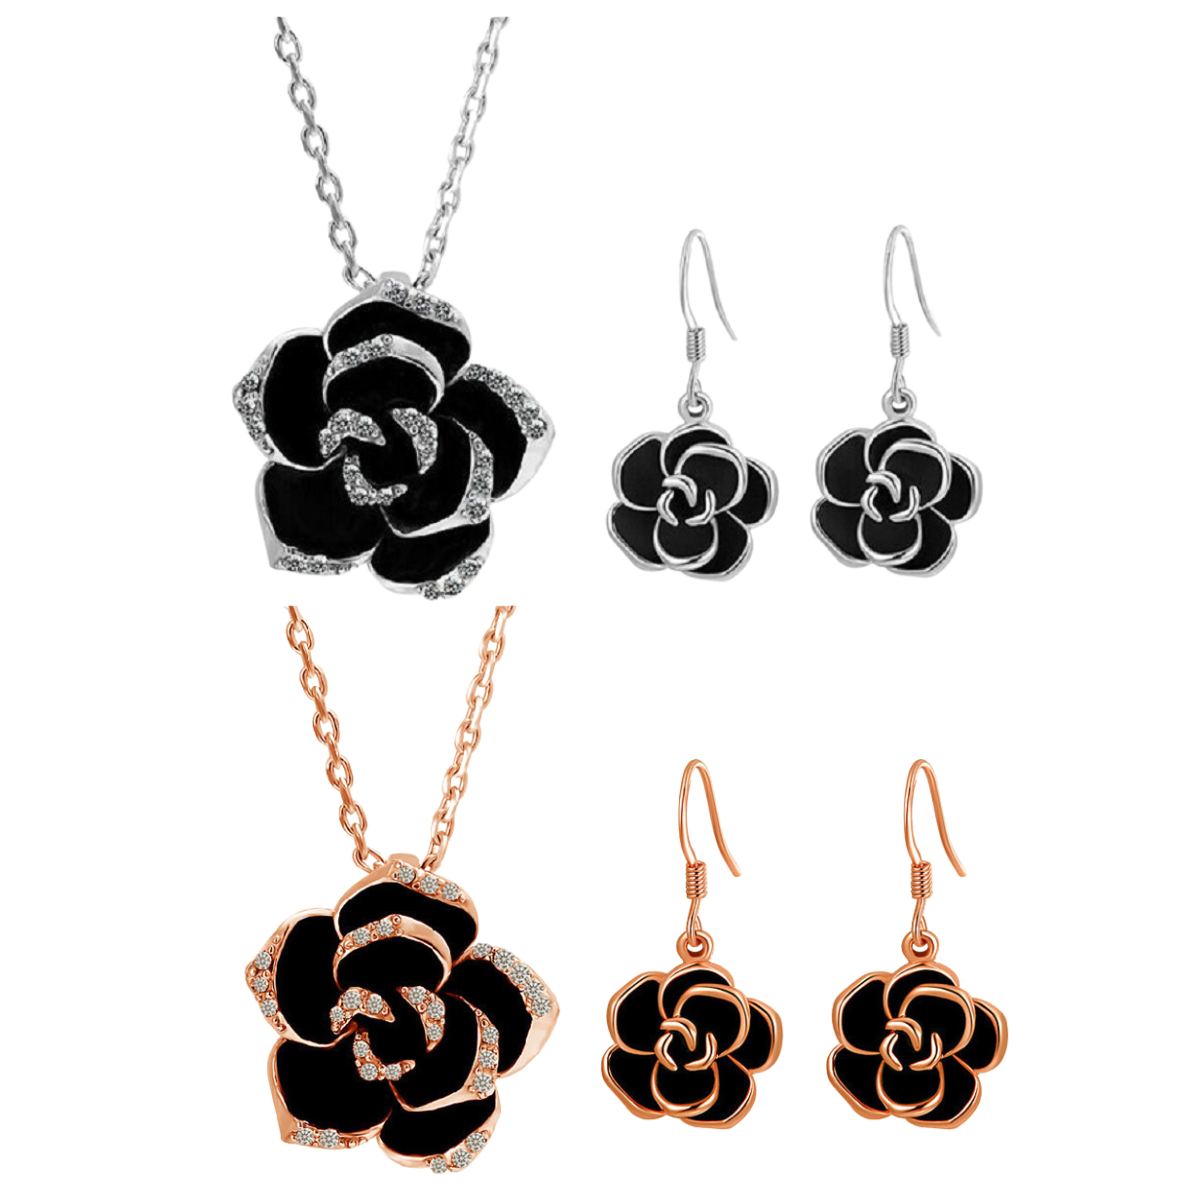 20pcs - Crystal Black Rose Flower Petals Pendant Necklace And Earrings Set - 5 Sets Each Colour|GCC095Variations|UK seller